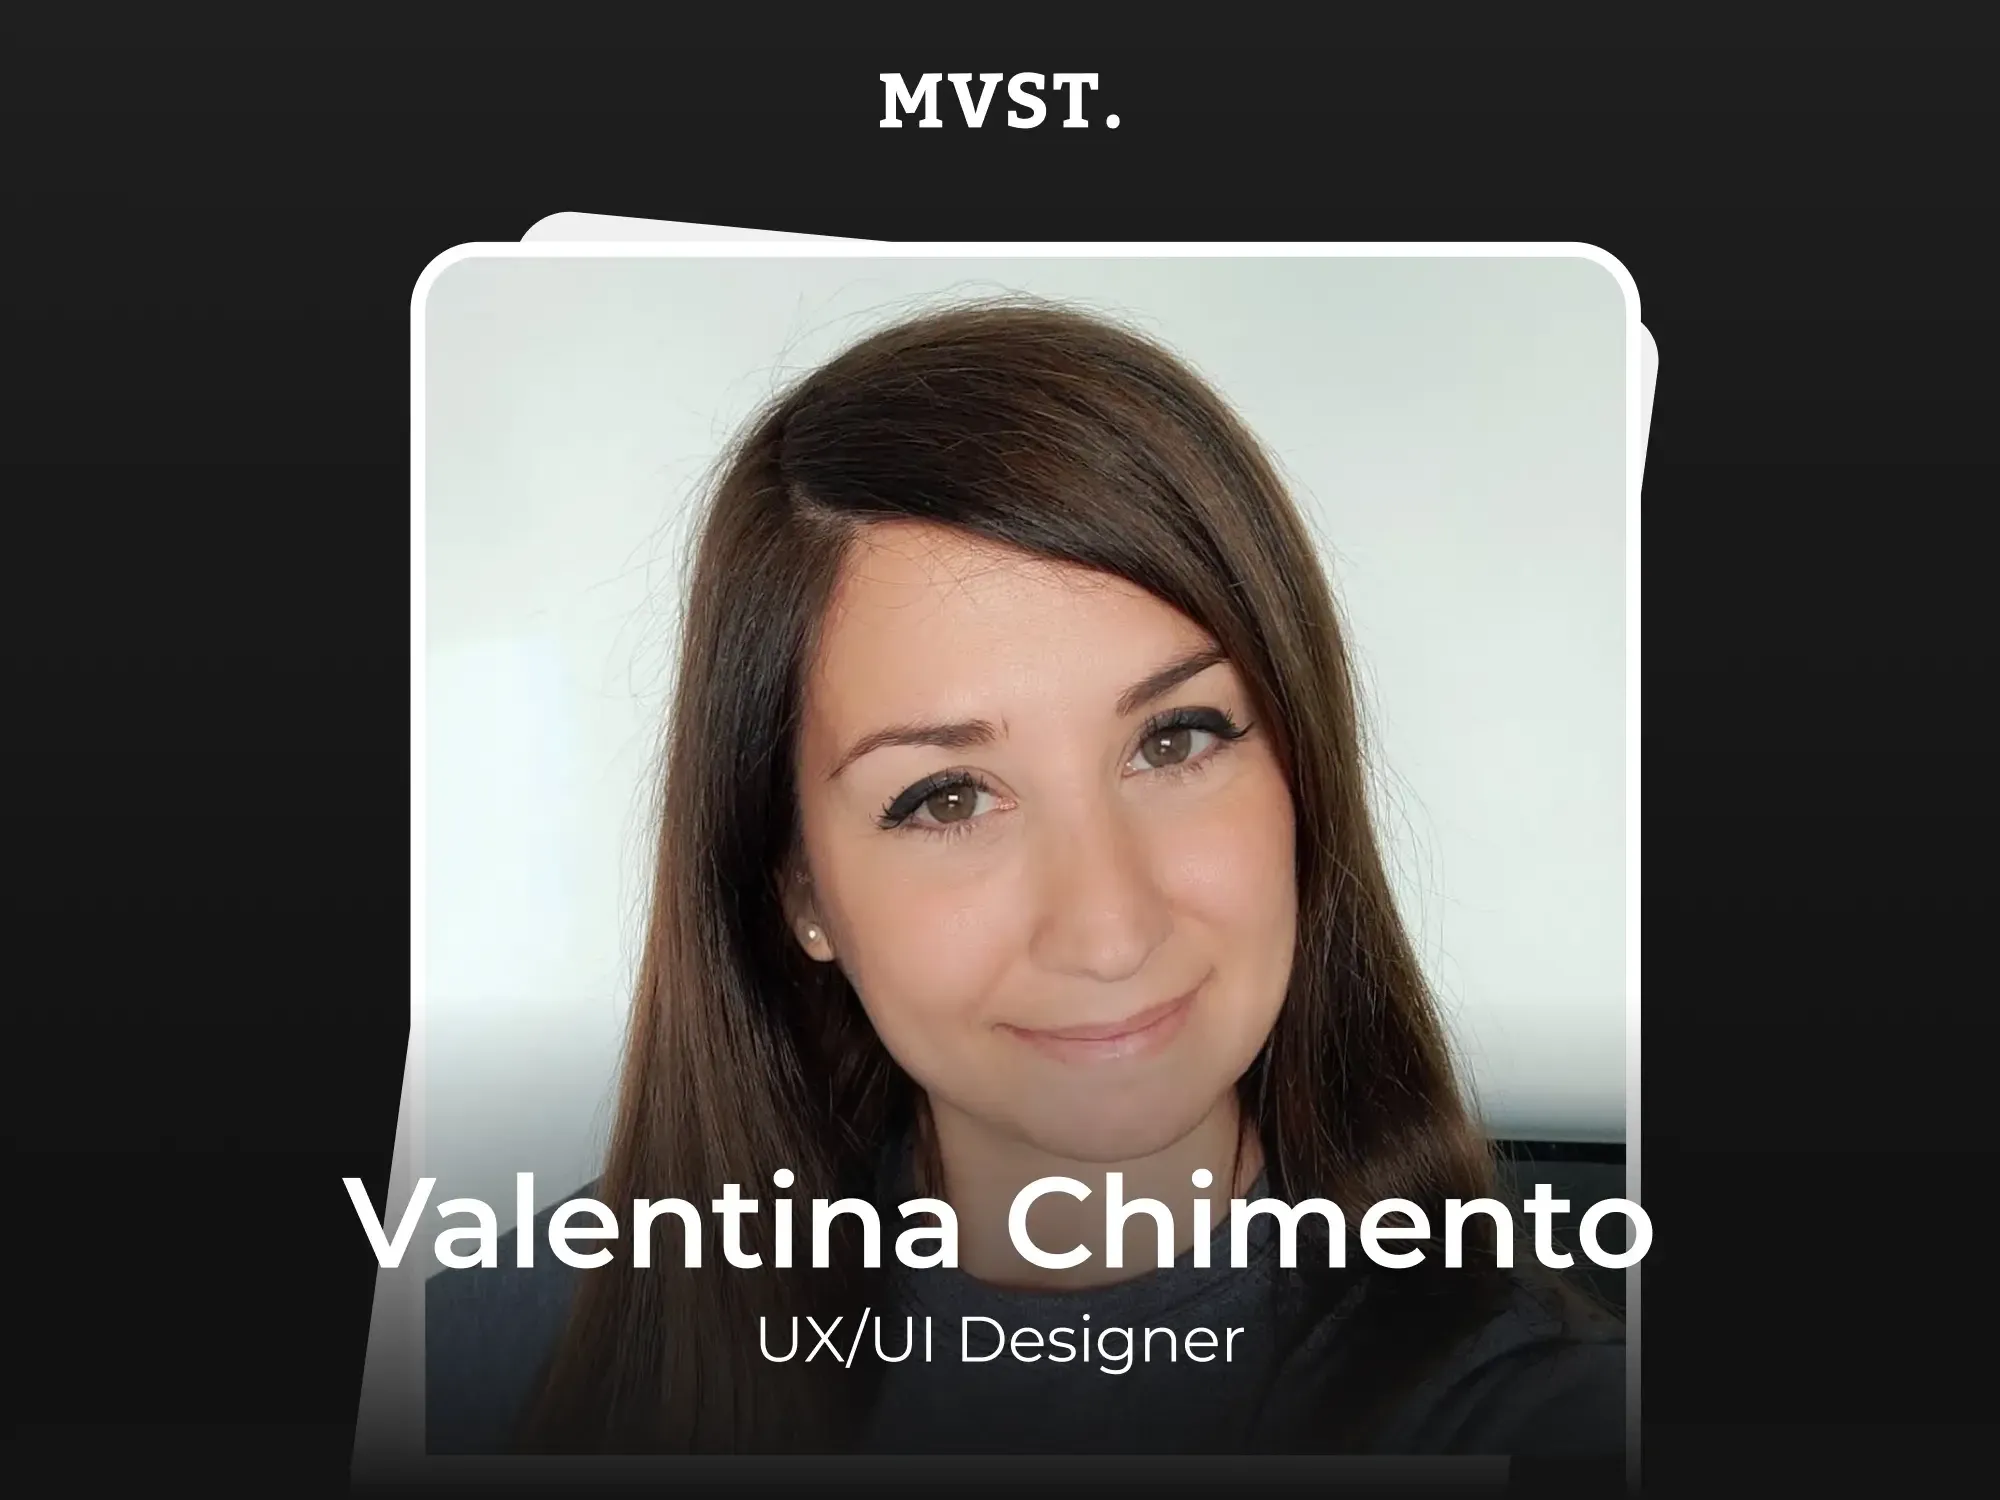 Welcome to MVST, Valentina!